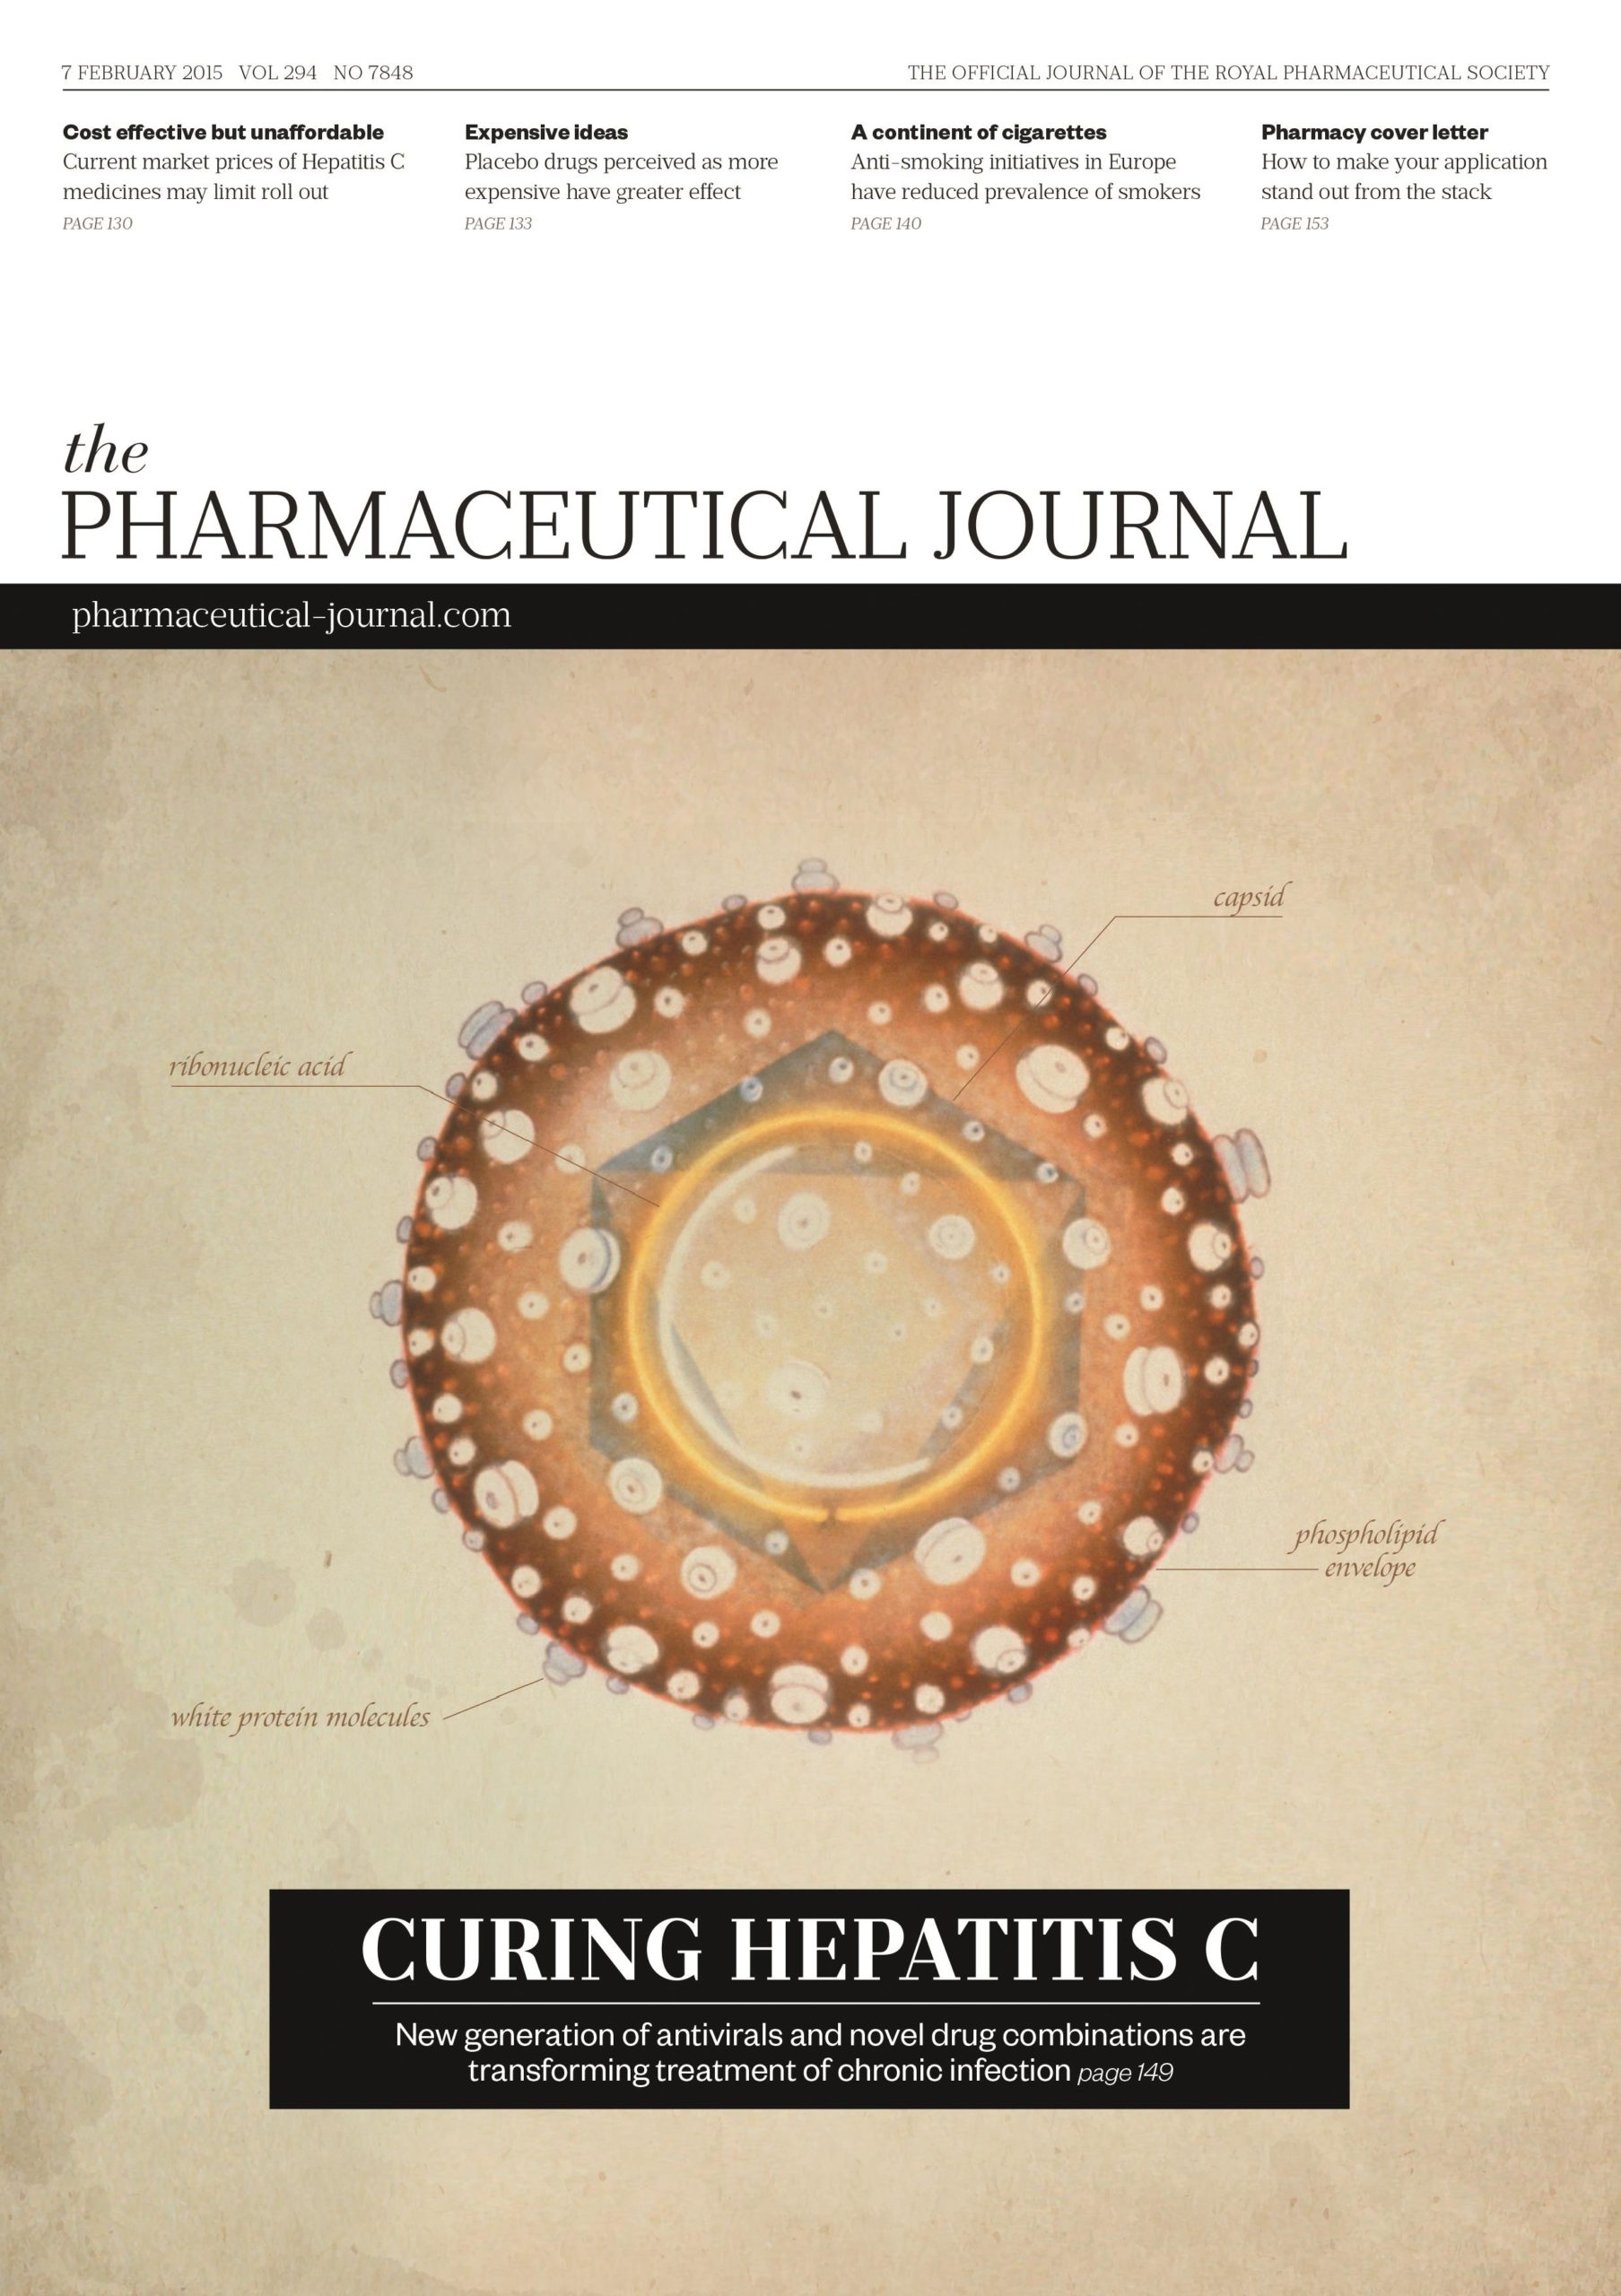 Publication issue cover for PJ, 7 February 2015, Vol 294, No 7848